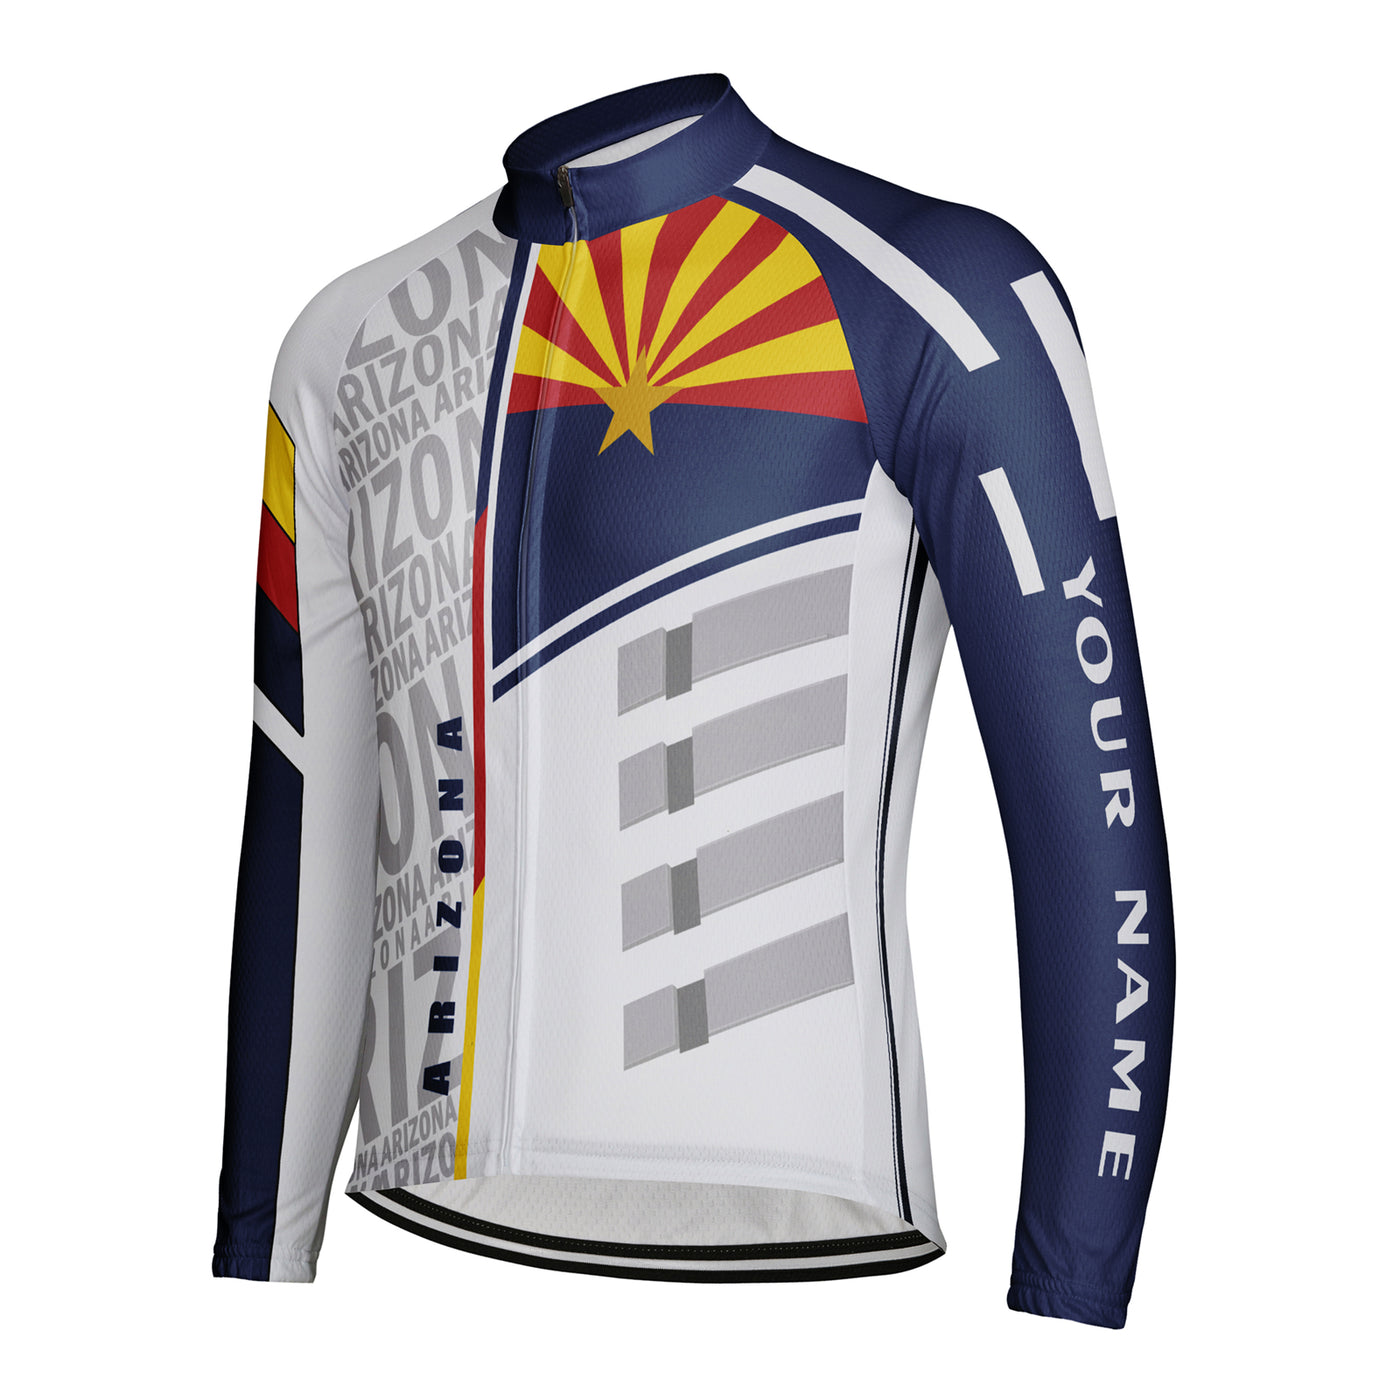 Customized Arizona Men's Cycling Jersey Long Sleeve